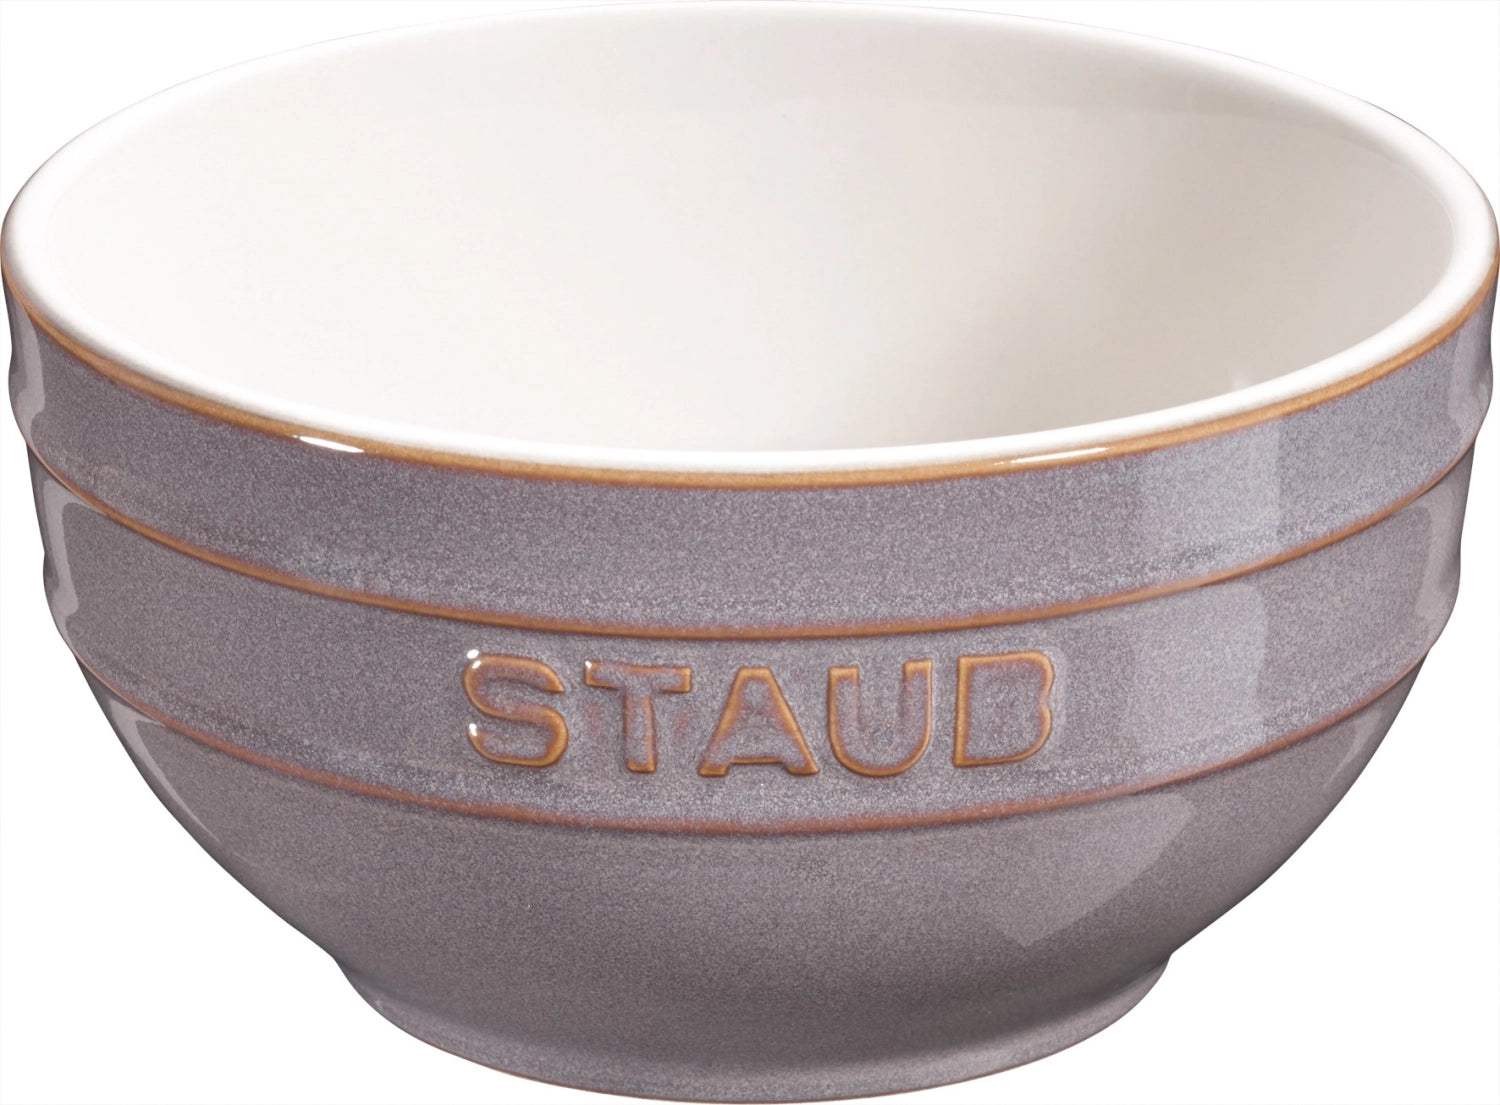 Keramik Schüssel mittel, antik-grau, 14 cm - KAQTU Design